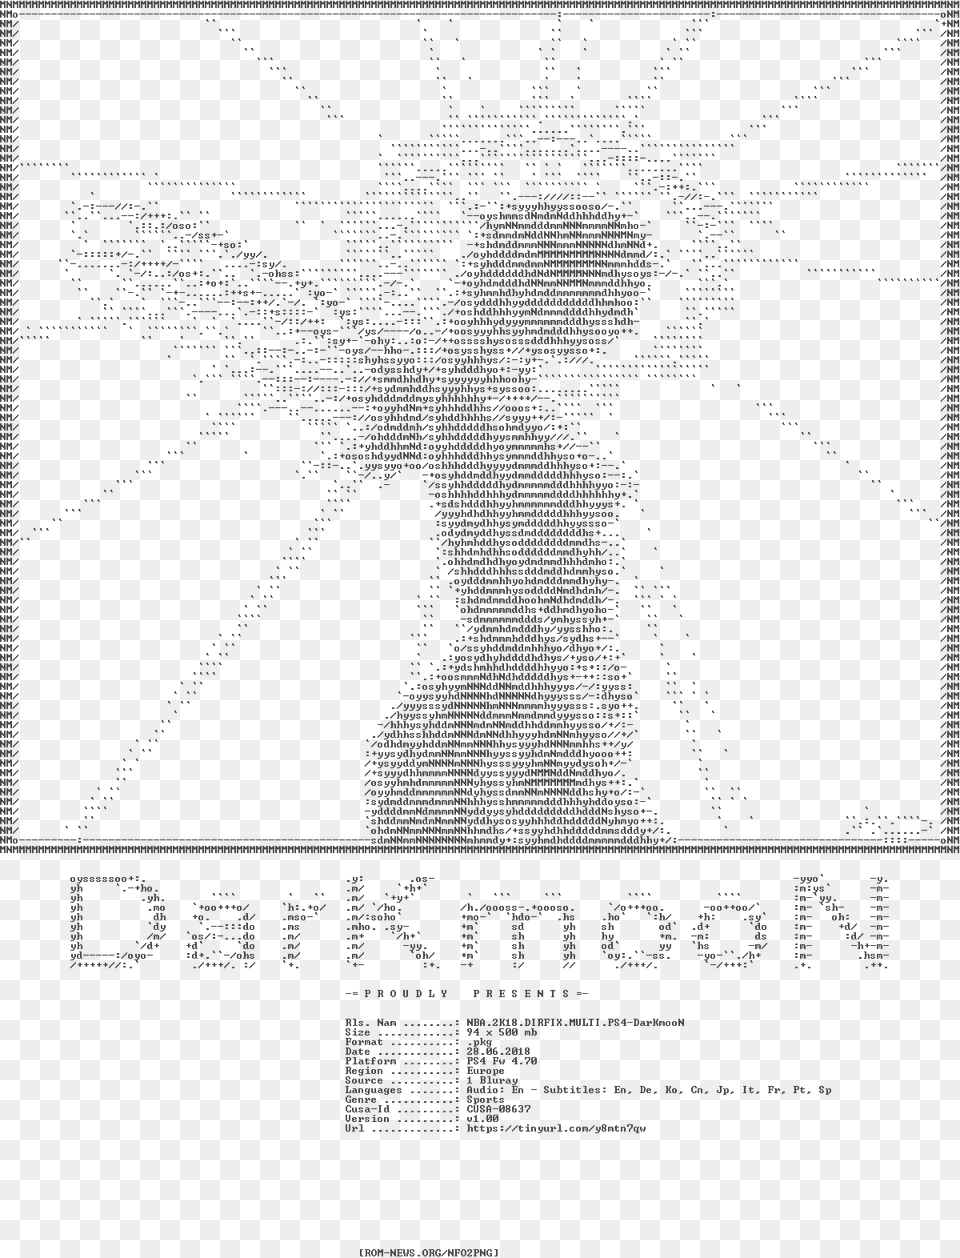 Nba 2k18 Dirfix Multi Ps4 Darkmoon Paper, Advertisement, Poster, Book, Publication Png Image